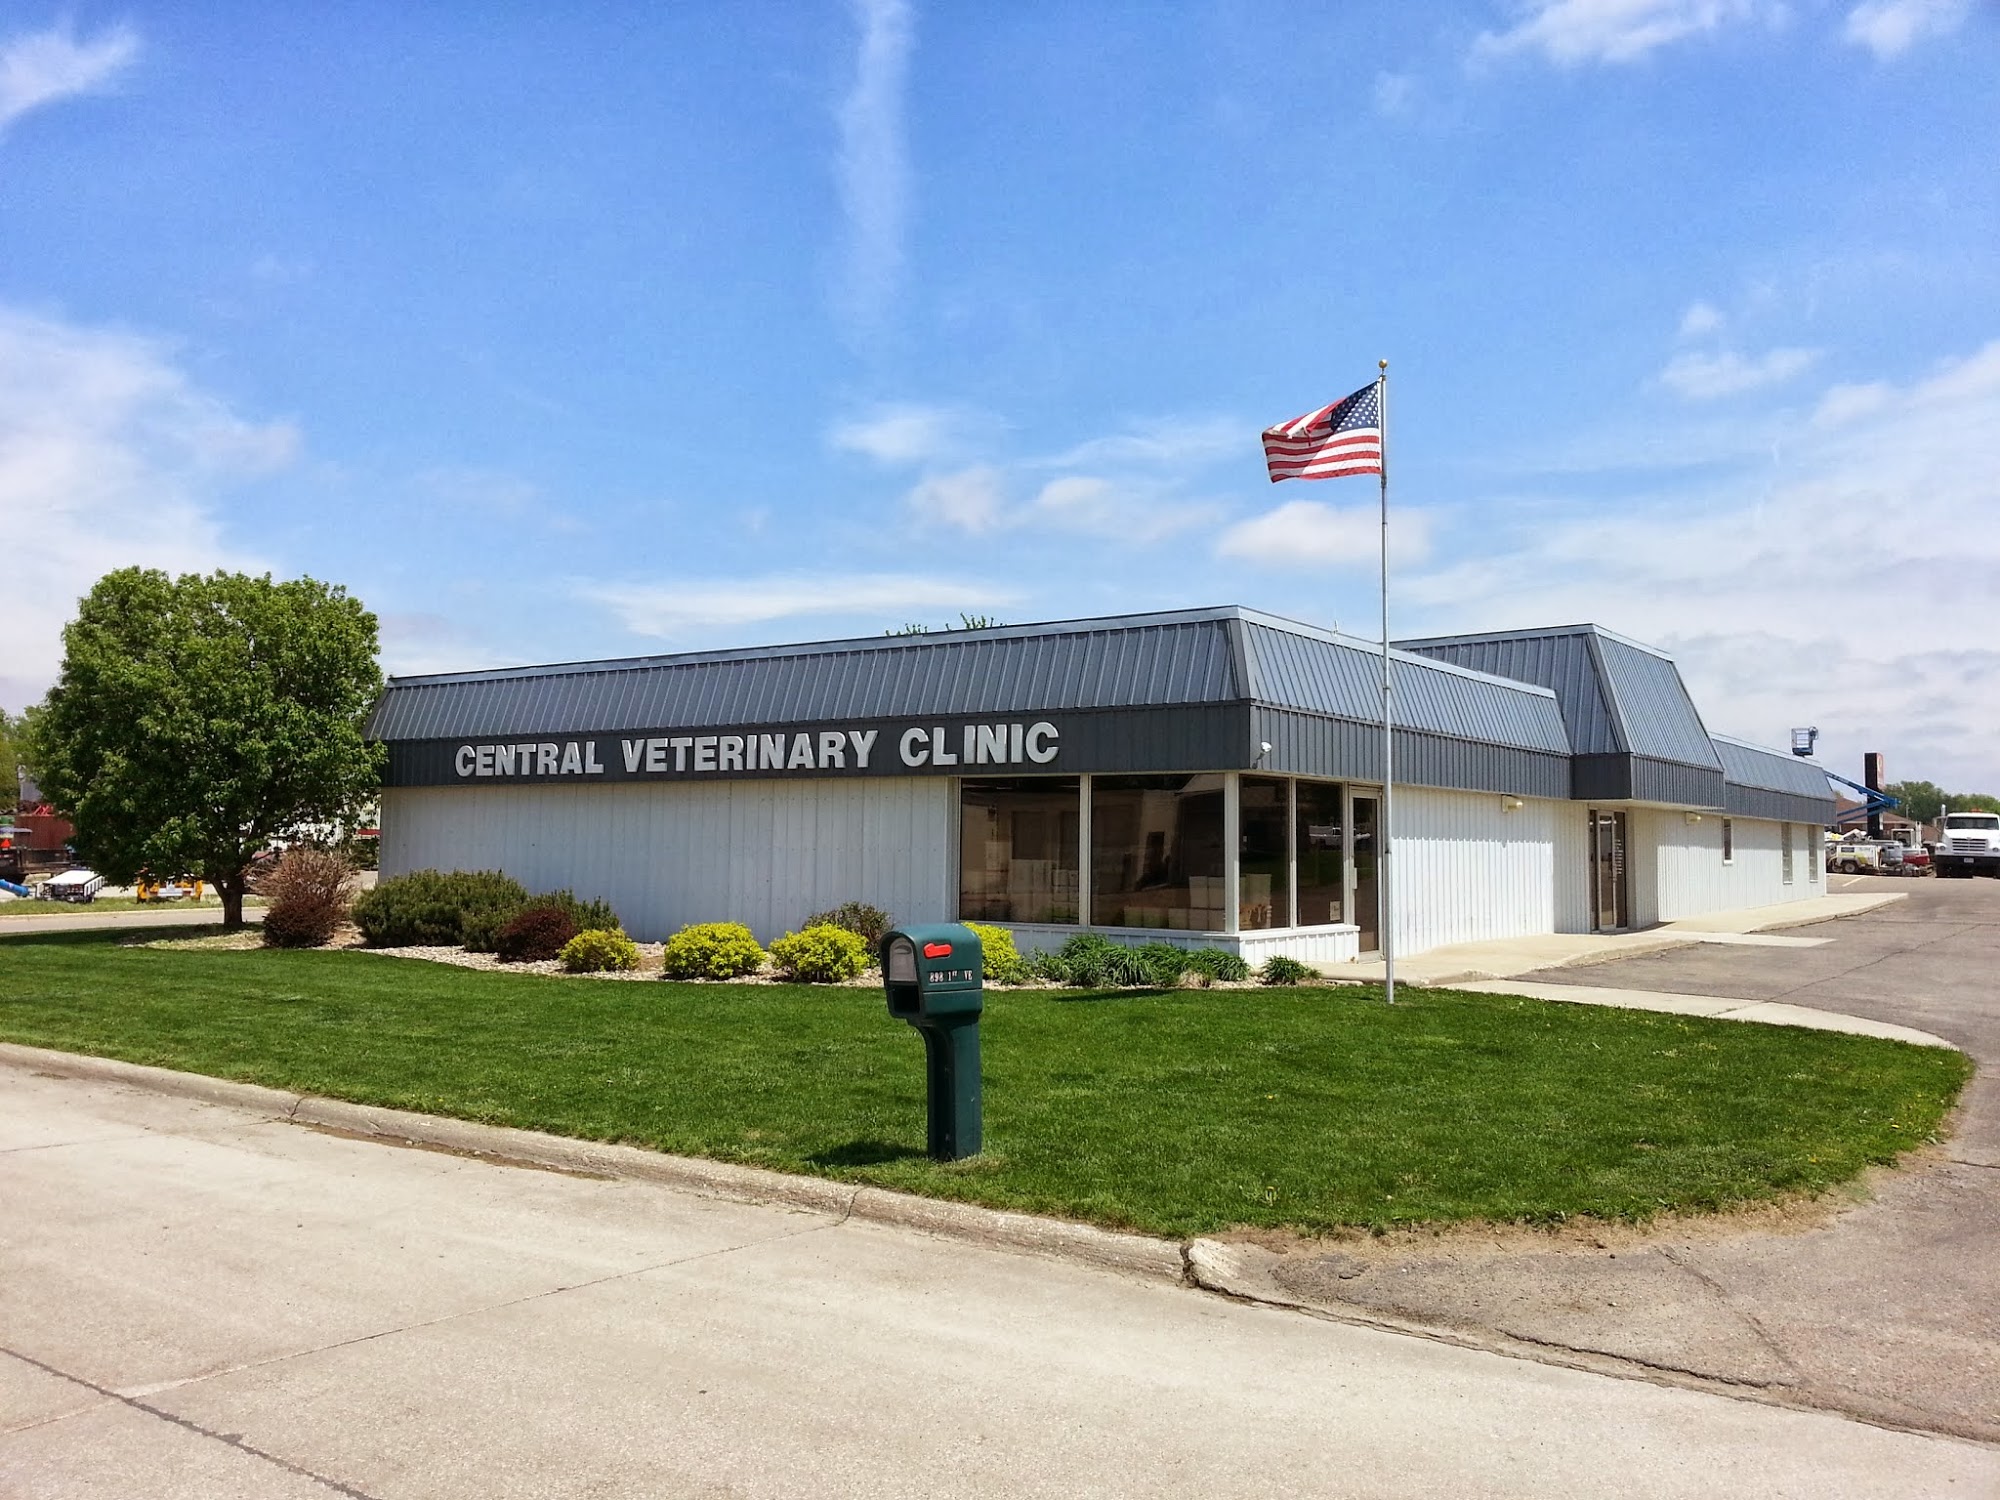 Central Veterinary Clinic